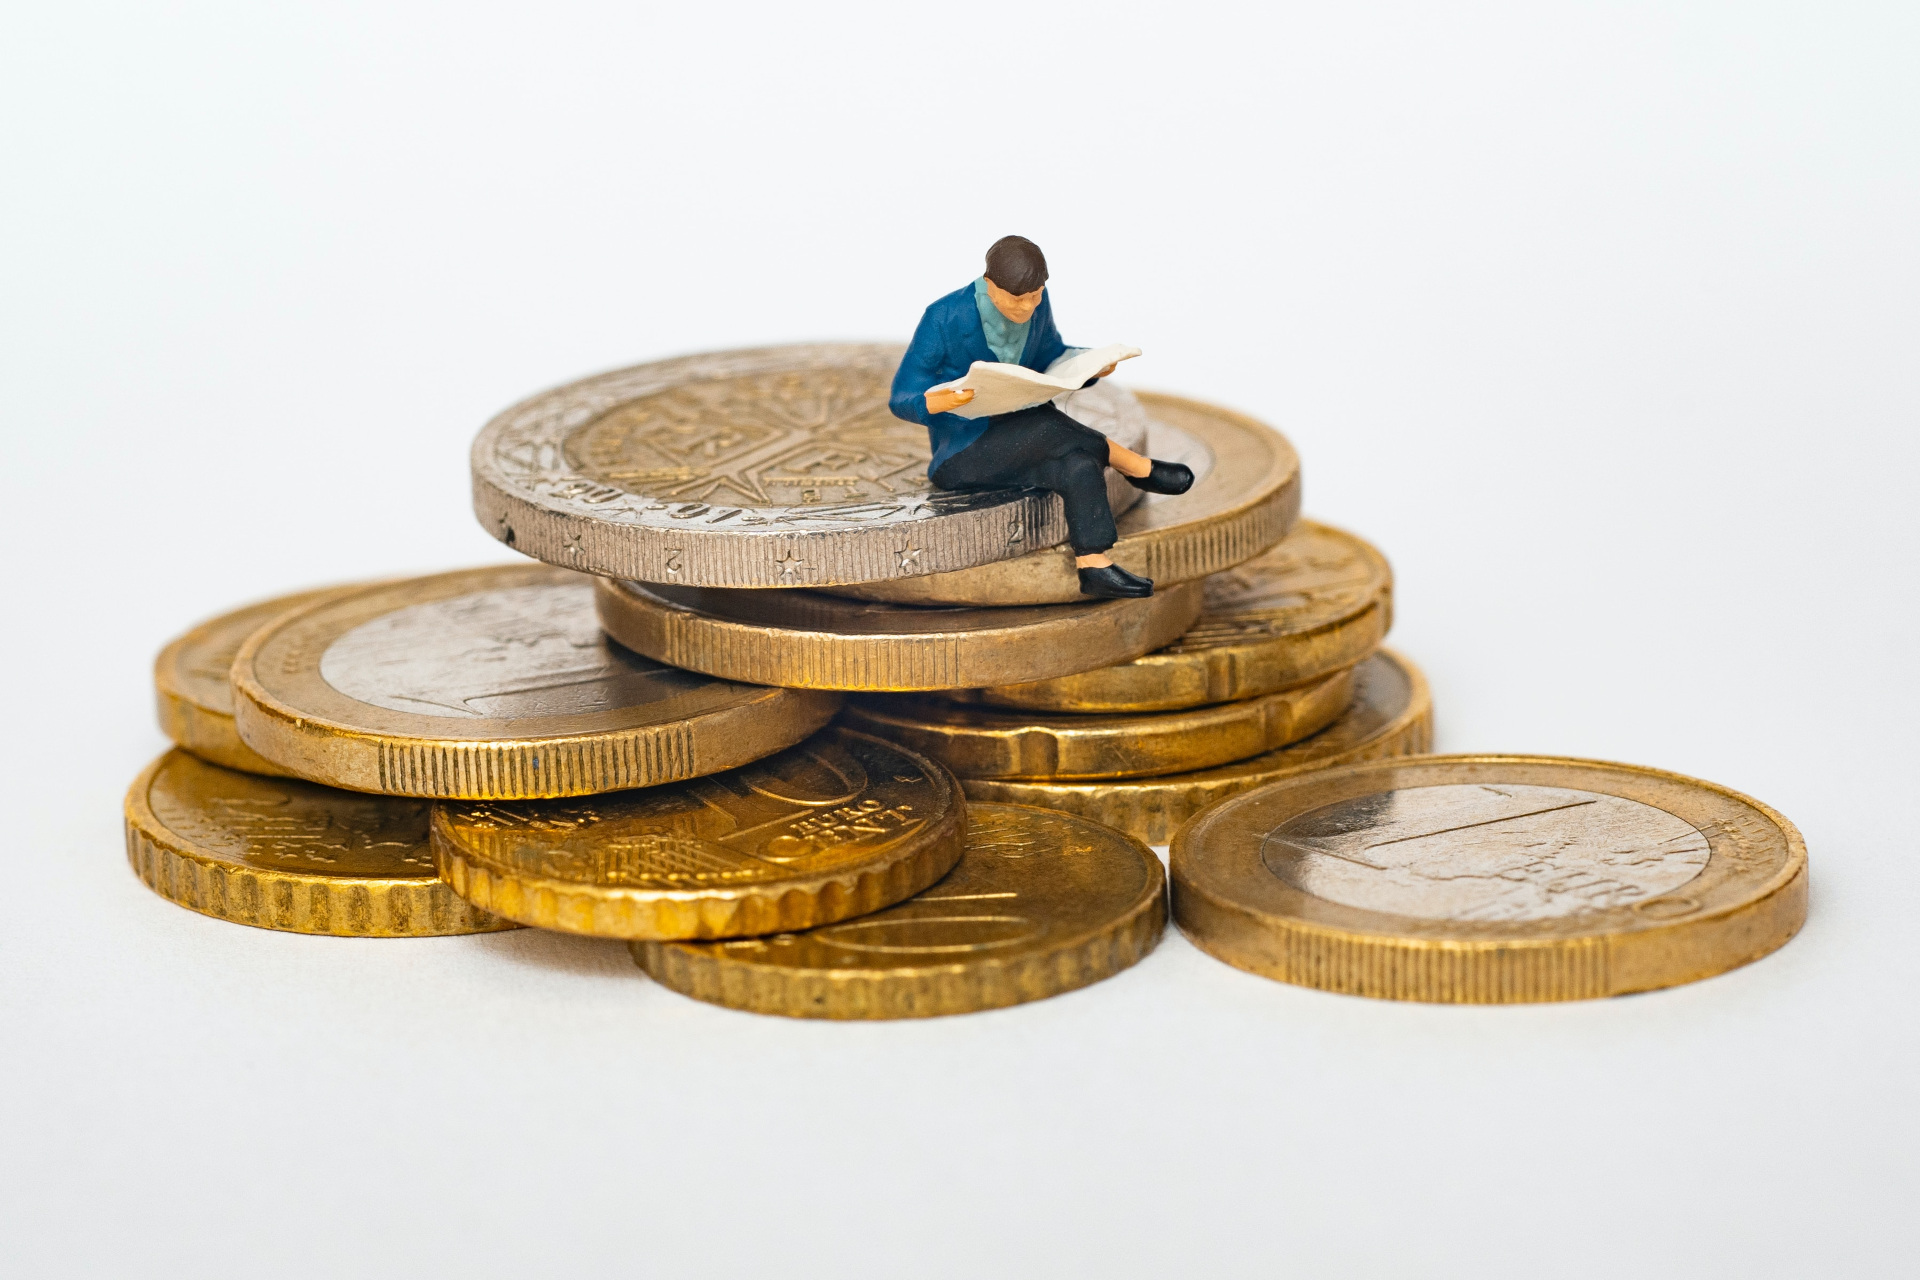 Miniature figure of a man sat on EU coins